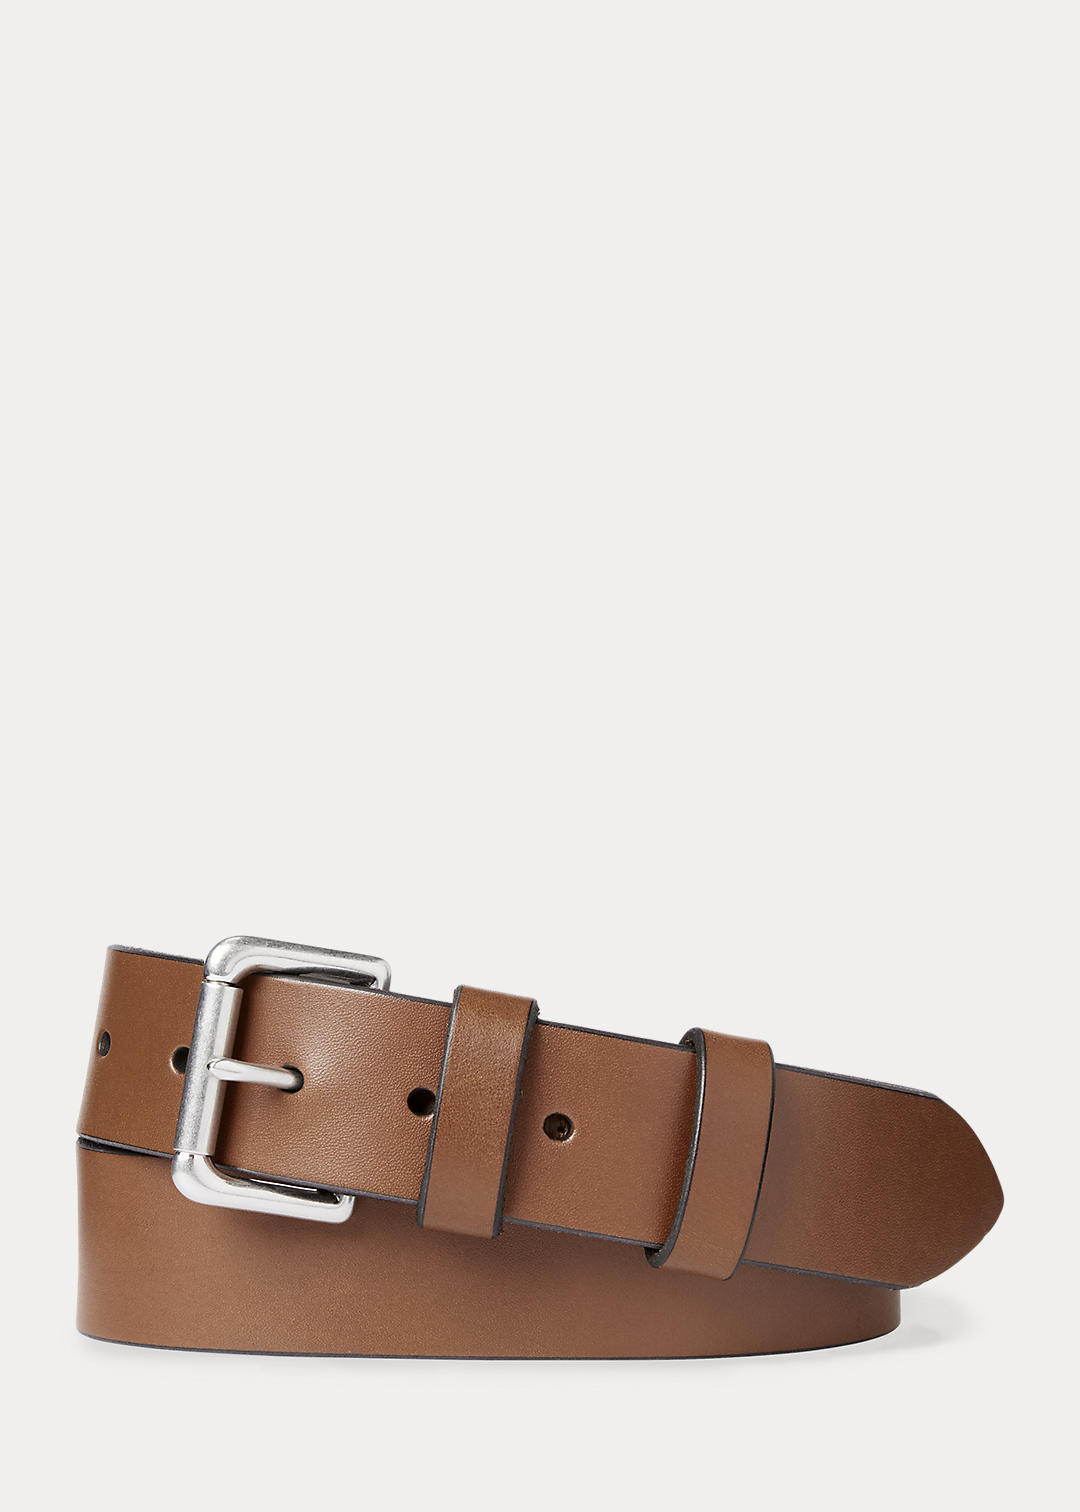 Polo Ralph Lauren Saddle Leather Belt 1